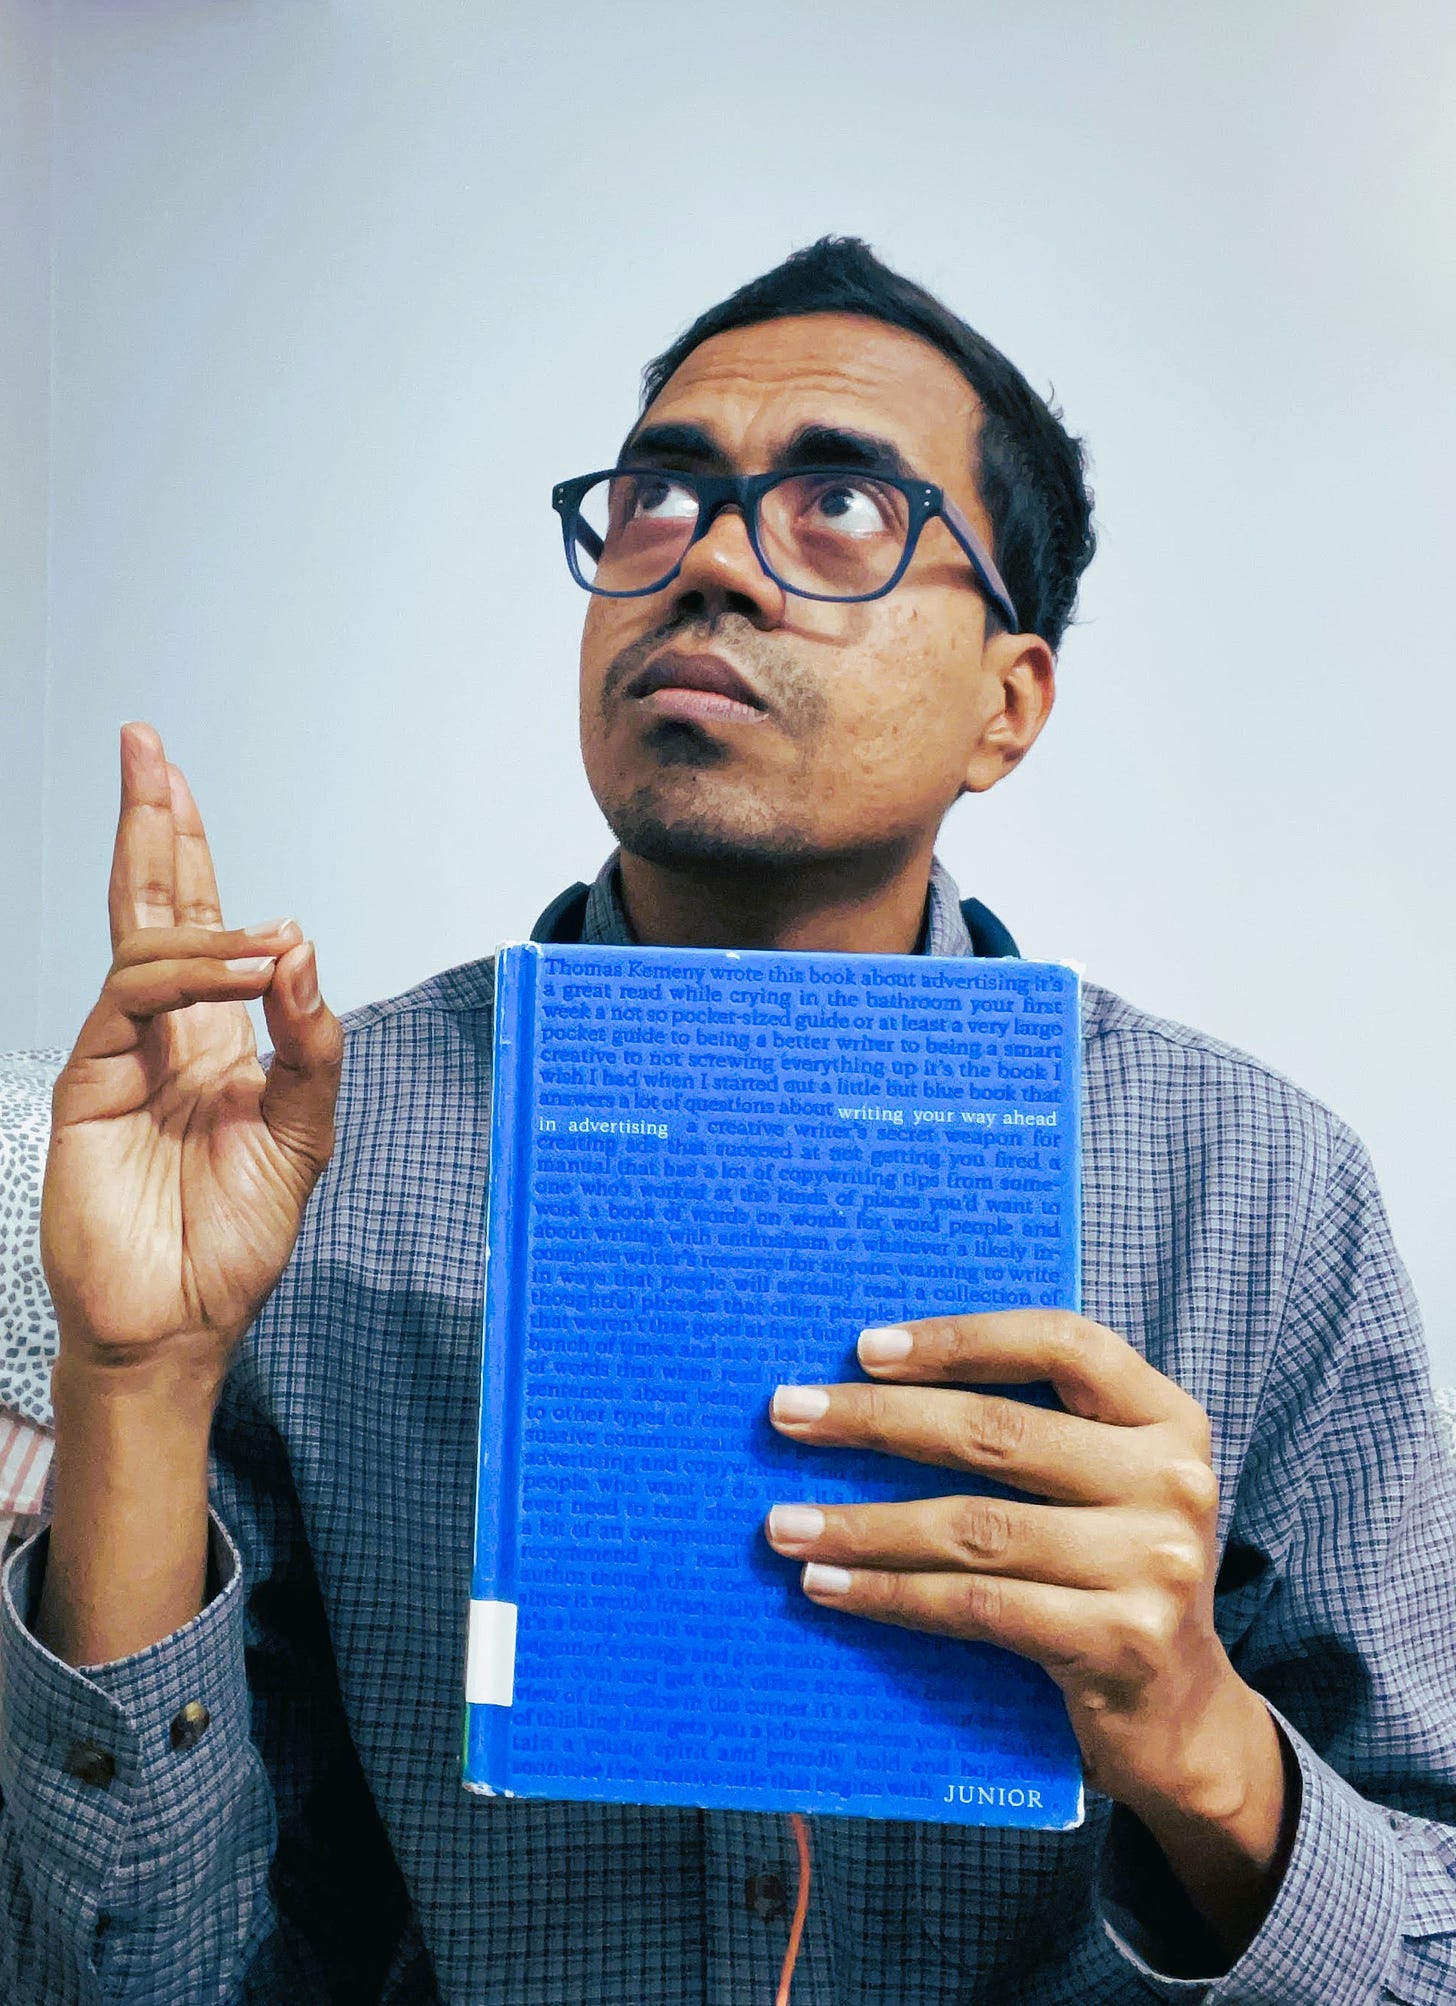 Nikhil Rajagopalan holding a copy of Junior by Thomas Kemeny and posing like a saint from renaissance times